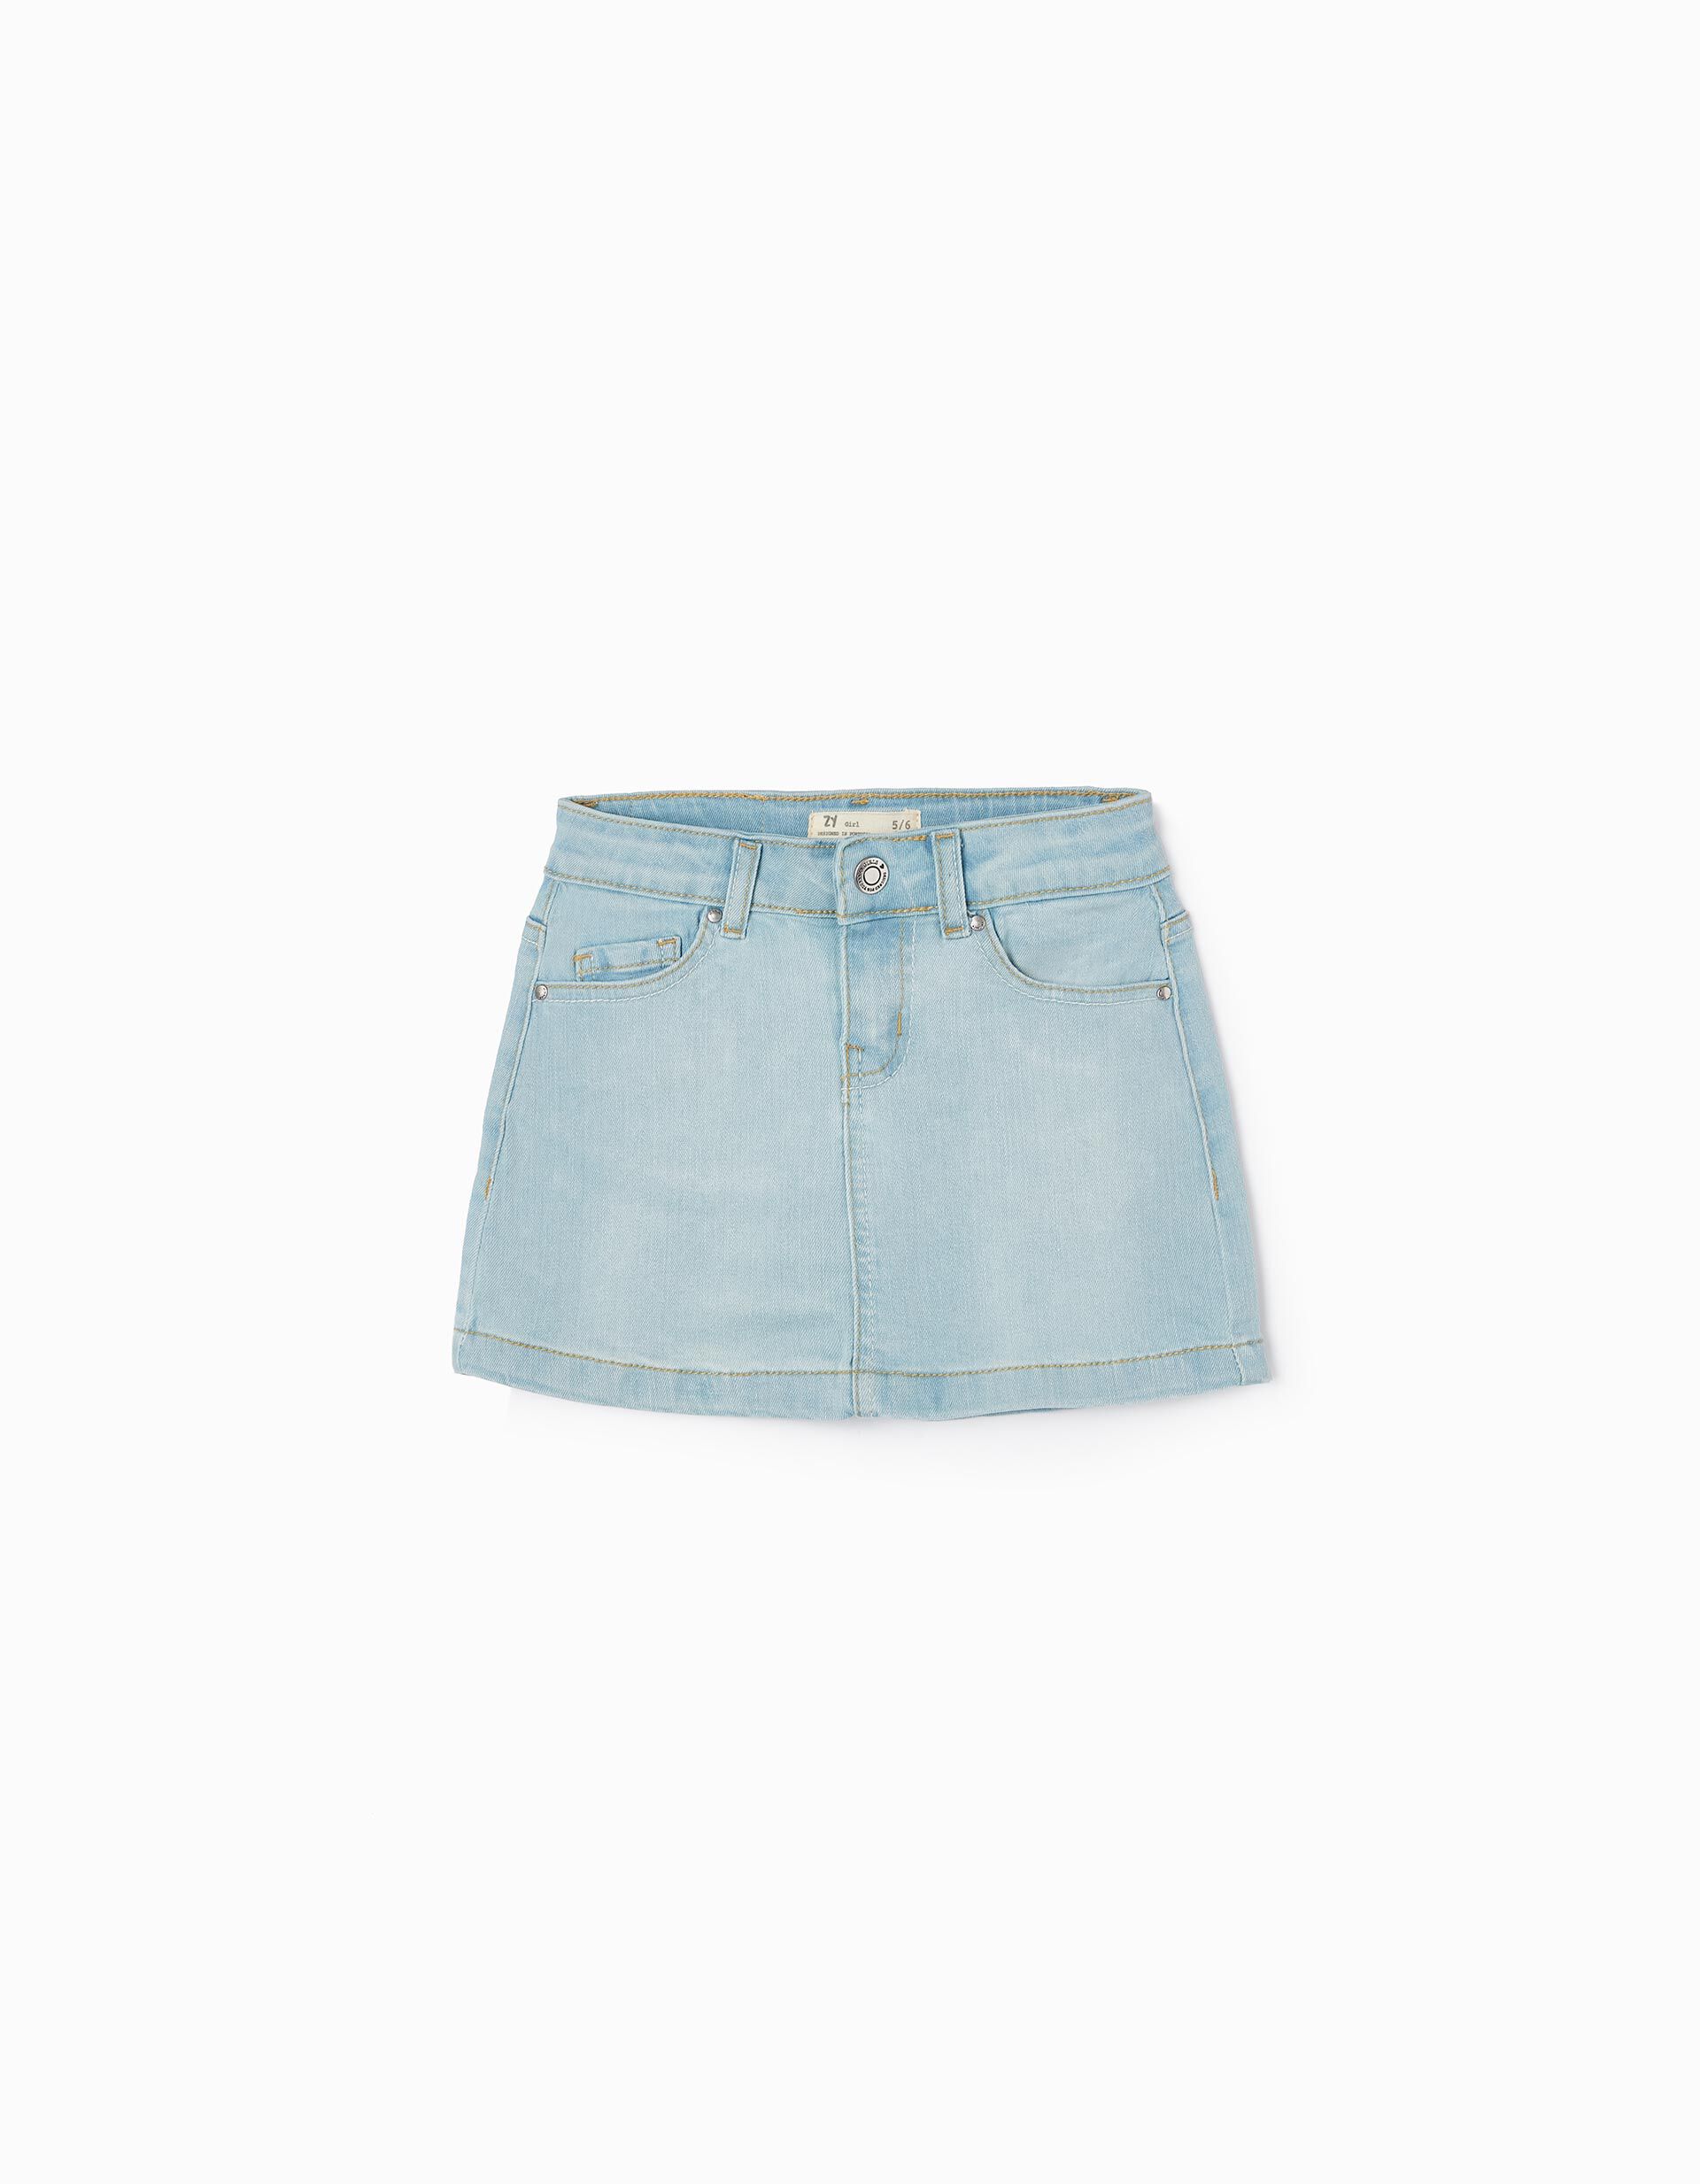 UNACOO Girls Botton Front Cut-Off Denim Skirt A-line Short Jeans Skirt 